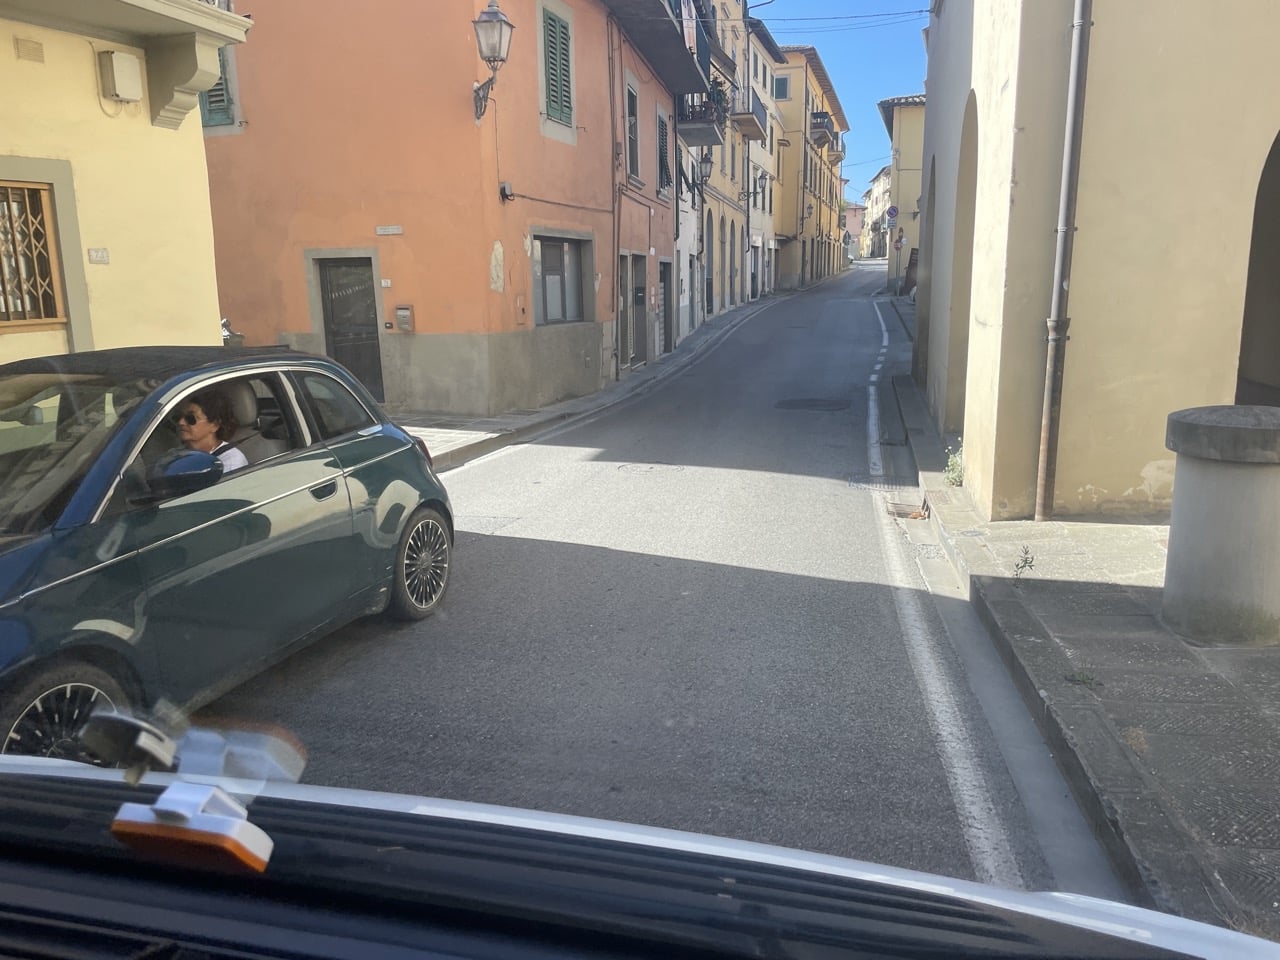 Hus på hjul i Italien.